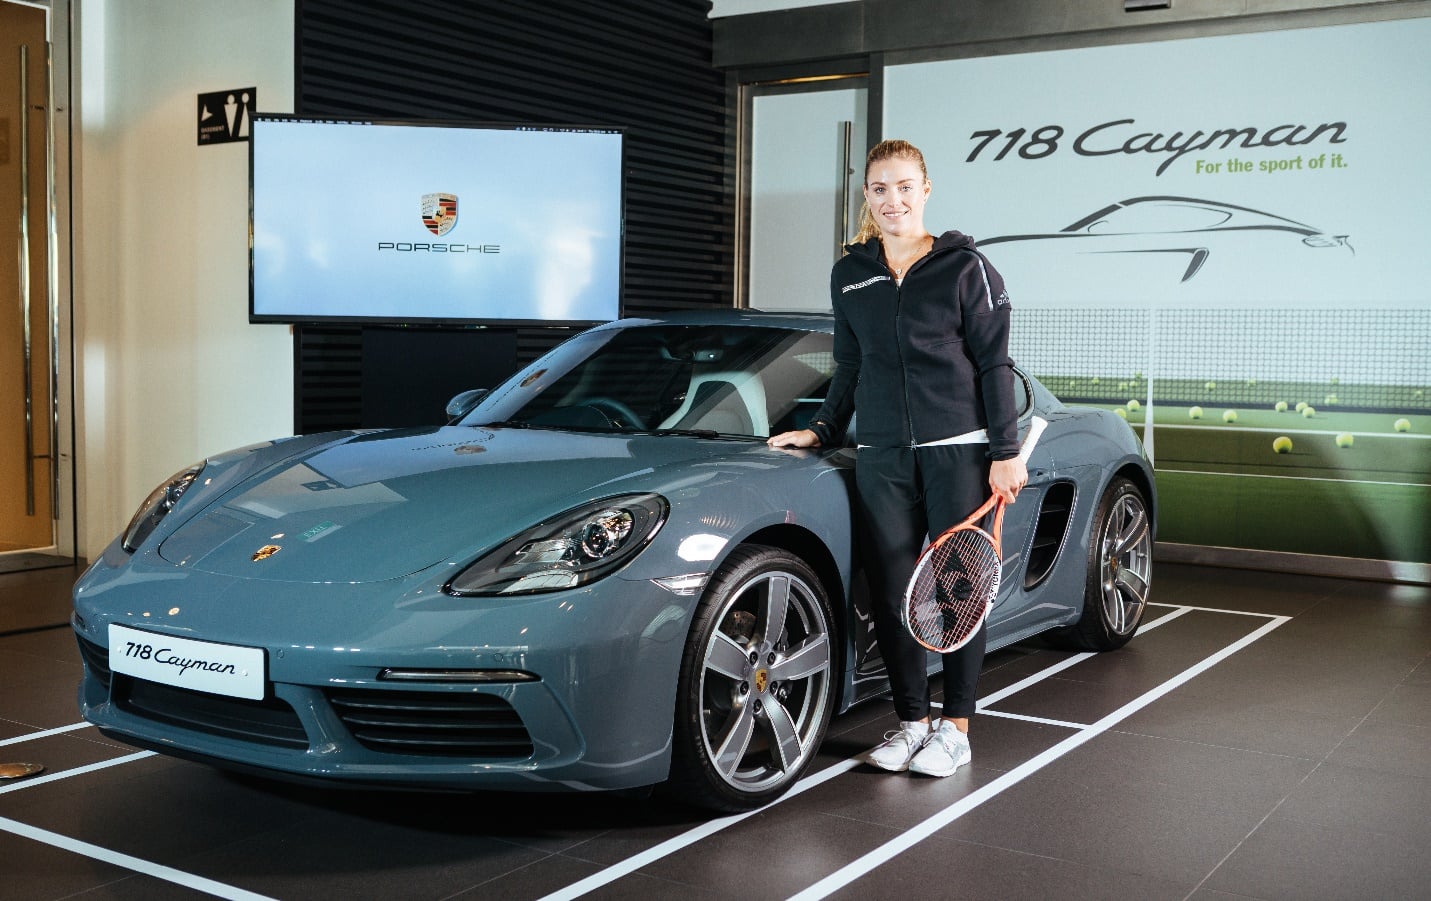 World No. 1 Professional Women's Tennis Player Angelique Kerber Unveiled the Porsche 718 Cayman